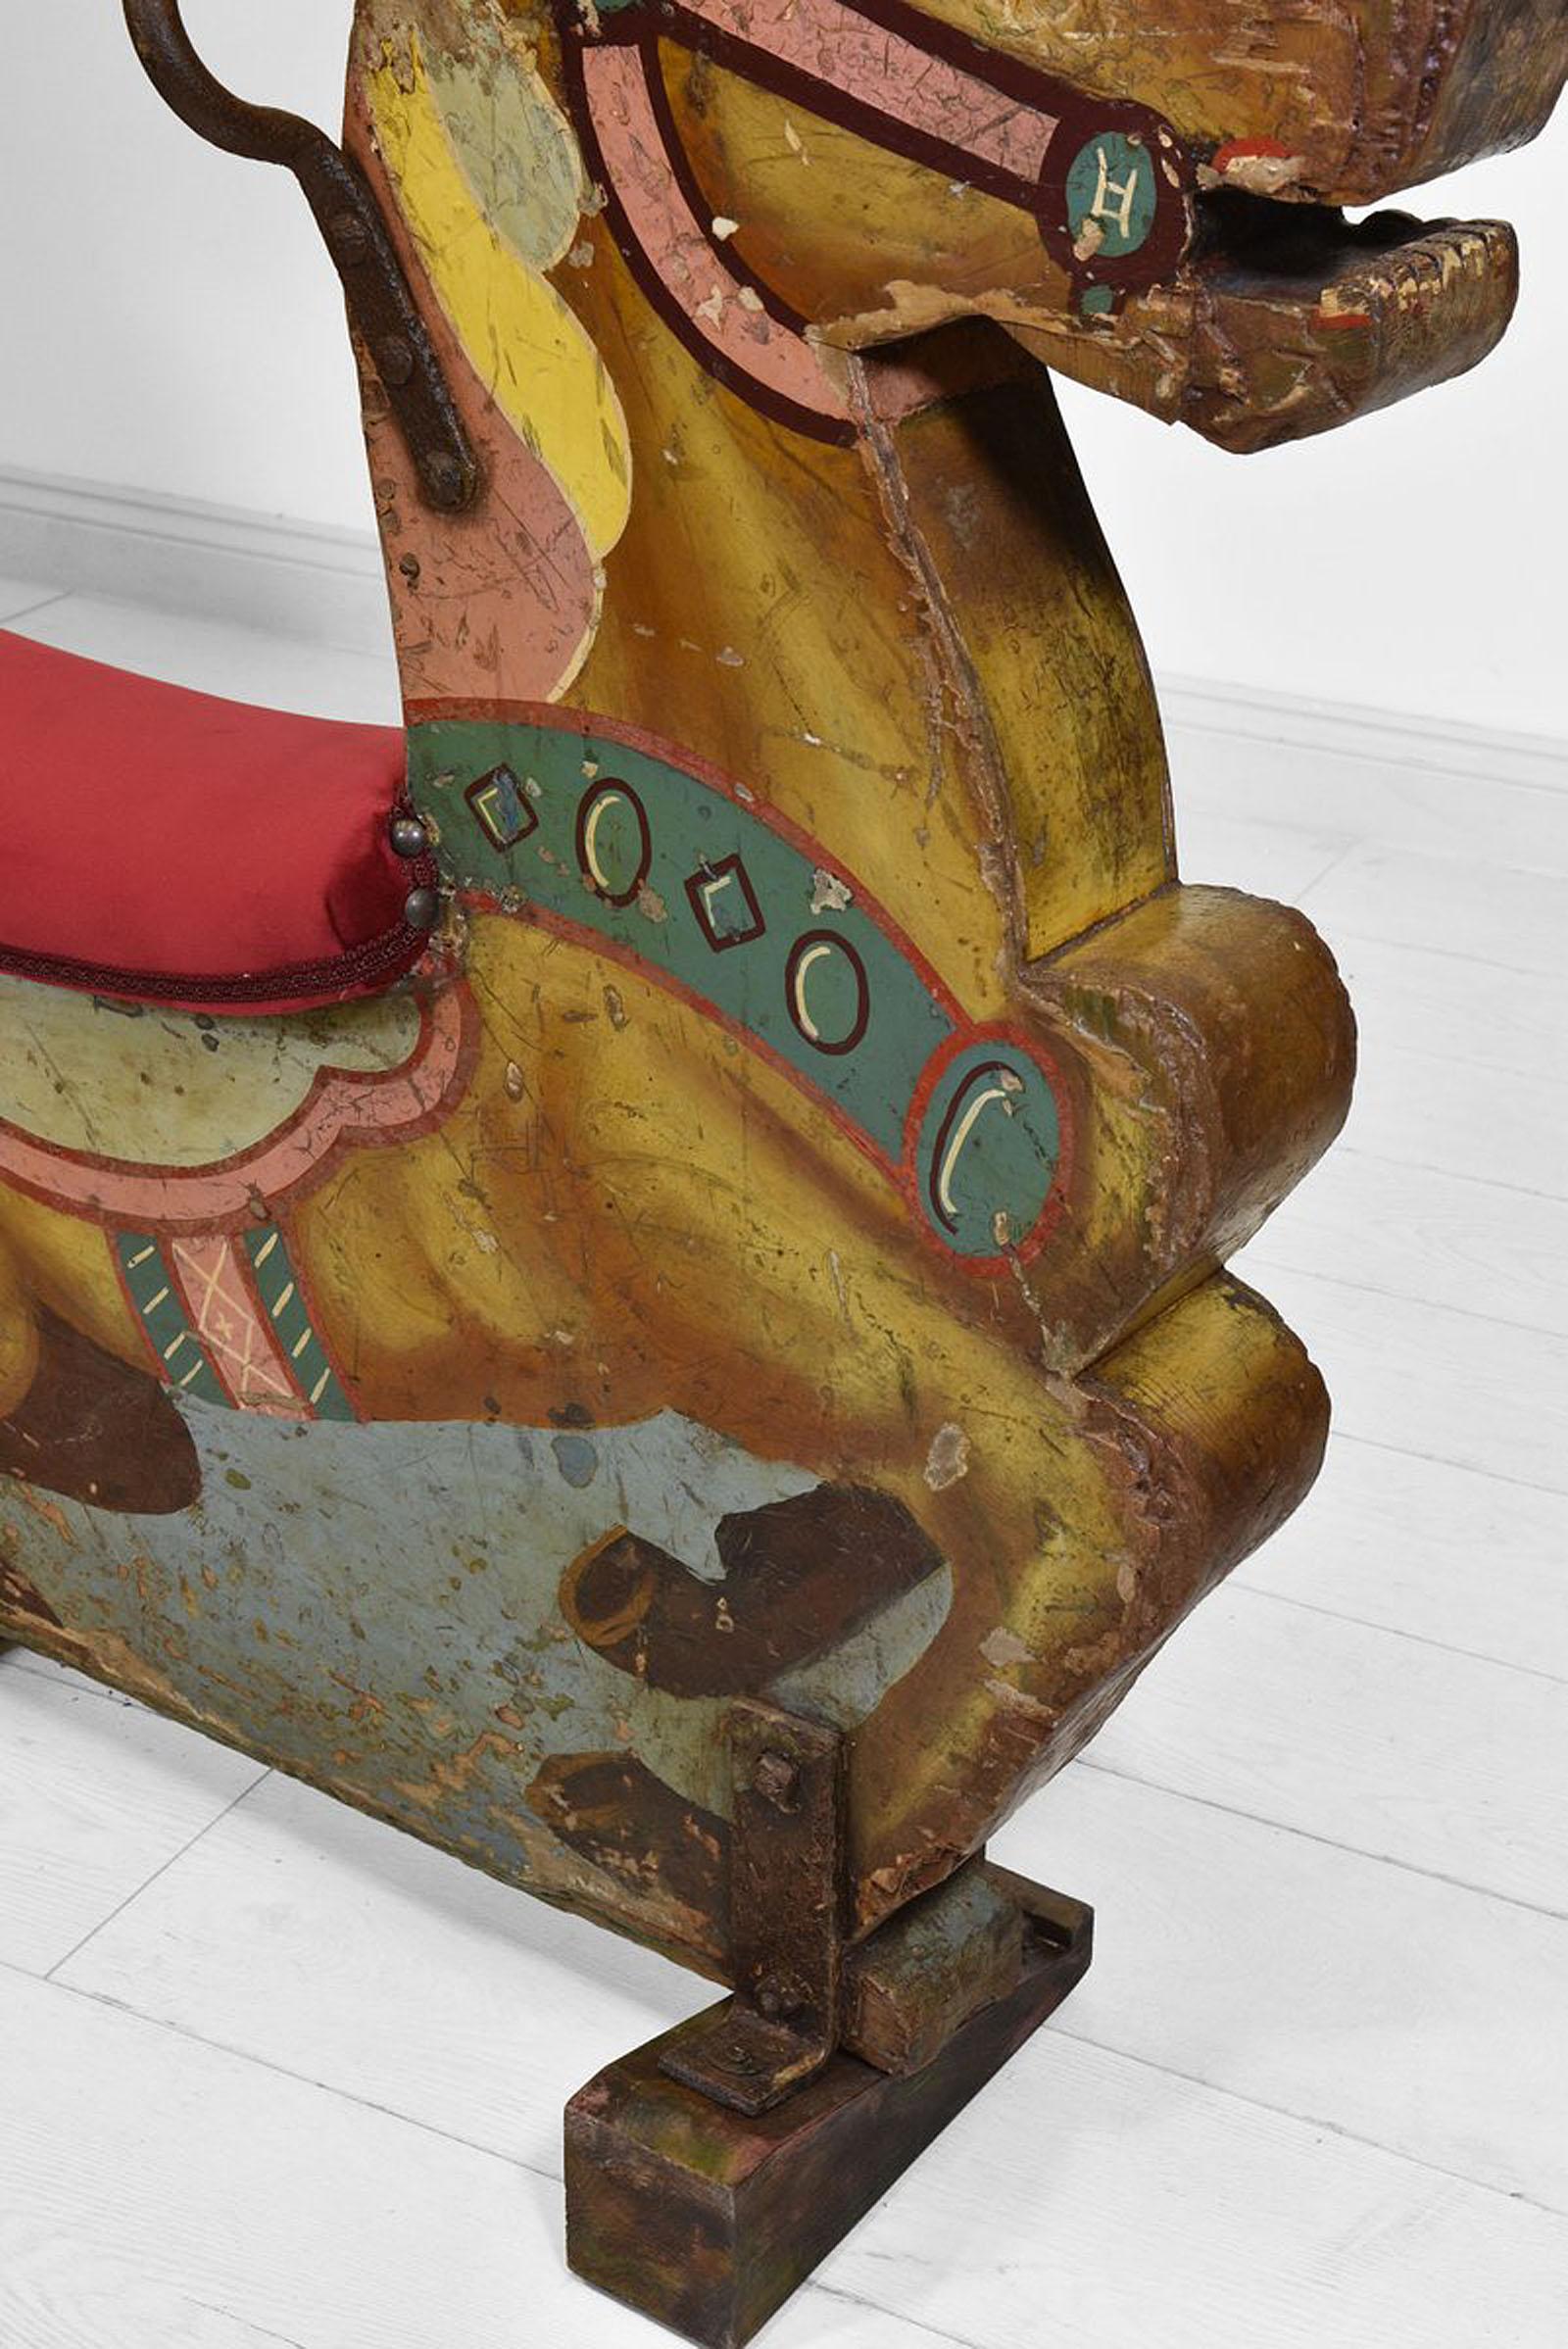 Art Deco Fairground Merry Go Round Carousel Ride Wooden Decorative Horse Velvet Seat